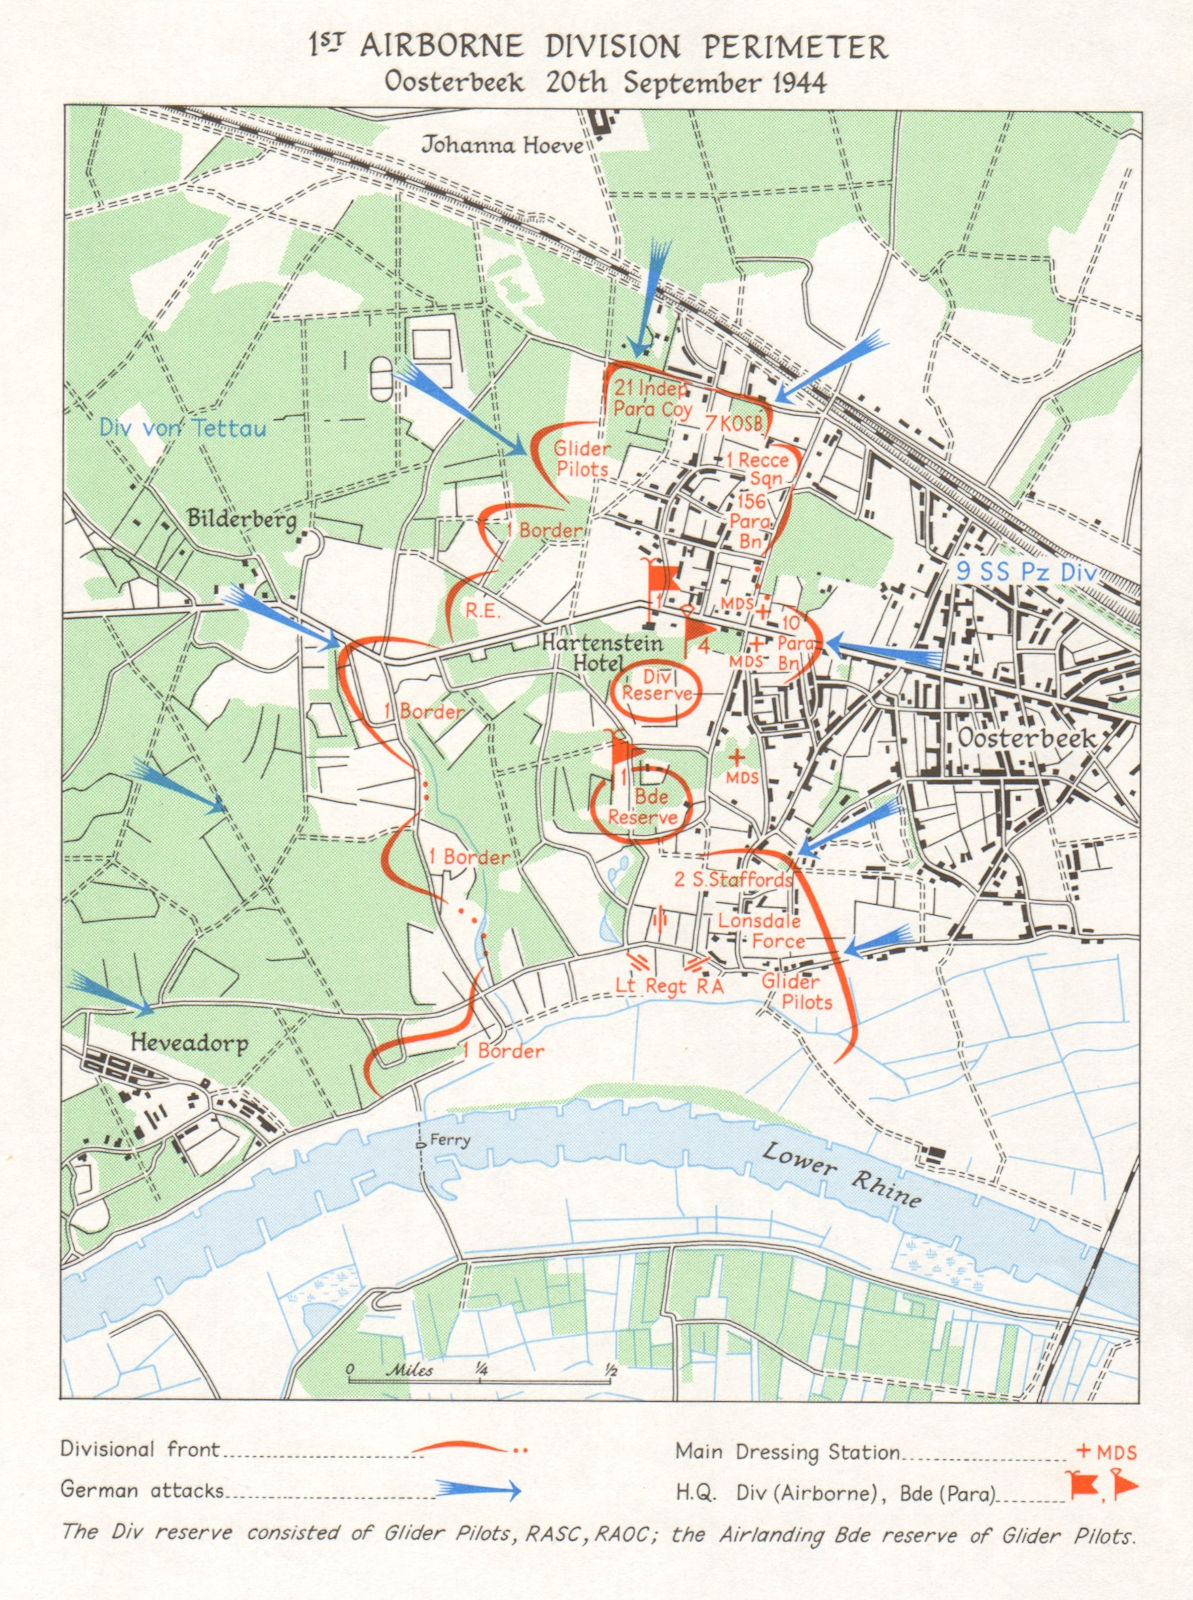 1st Airborne Division. Oosterbeek 20th September 1944. Market Garden 1968 map